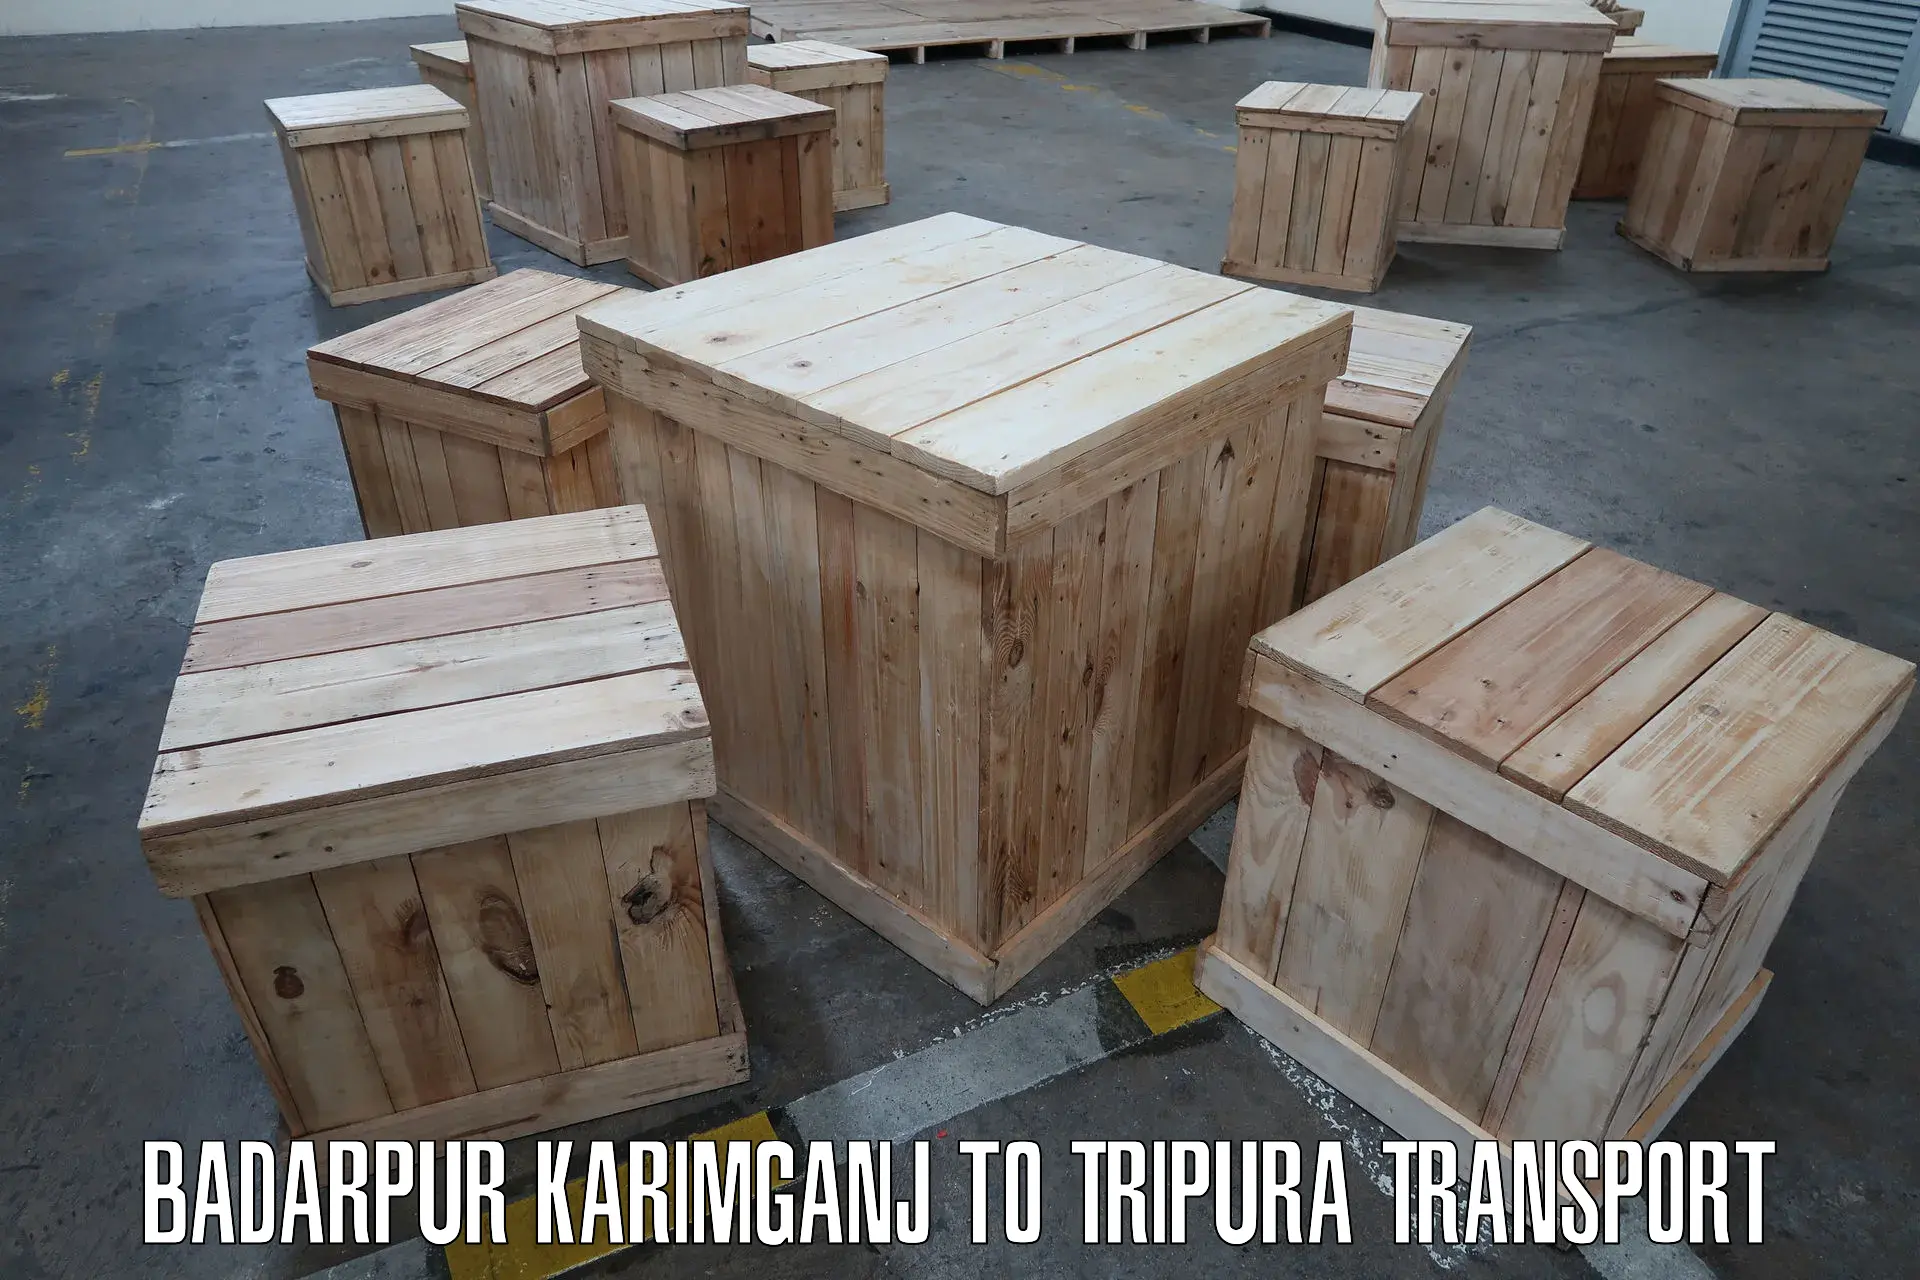 Transport in sharing Badarpur Karimganj to Agartala